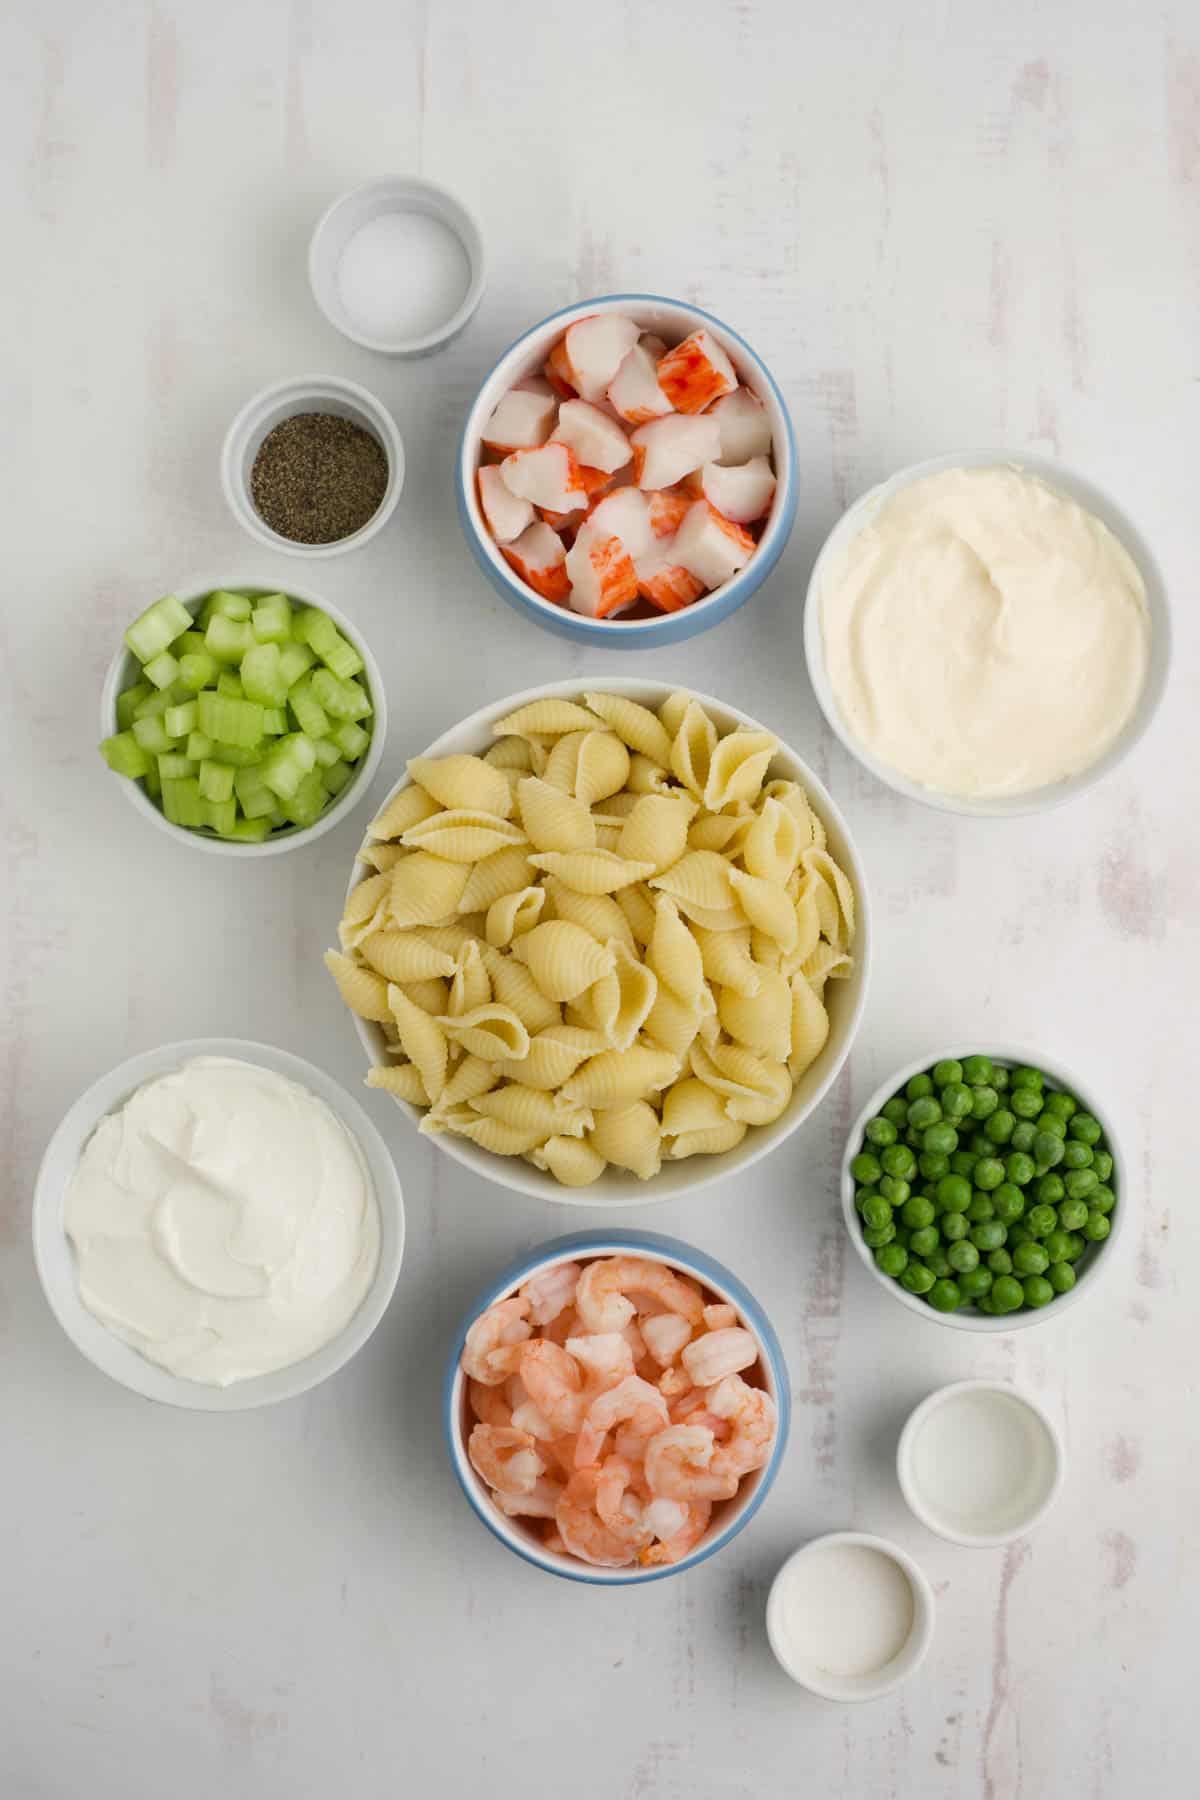 Ingredients for seafood pasta salad.